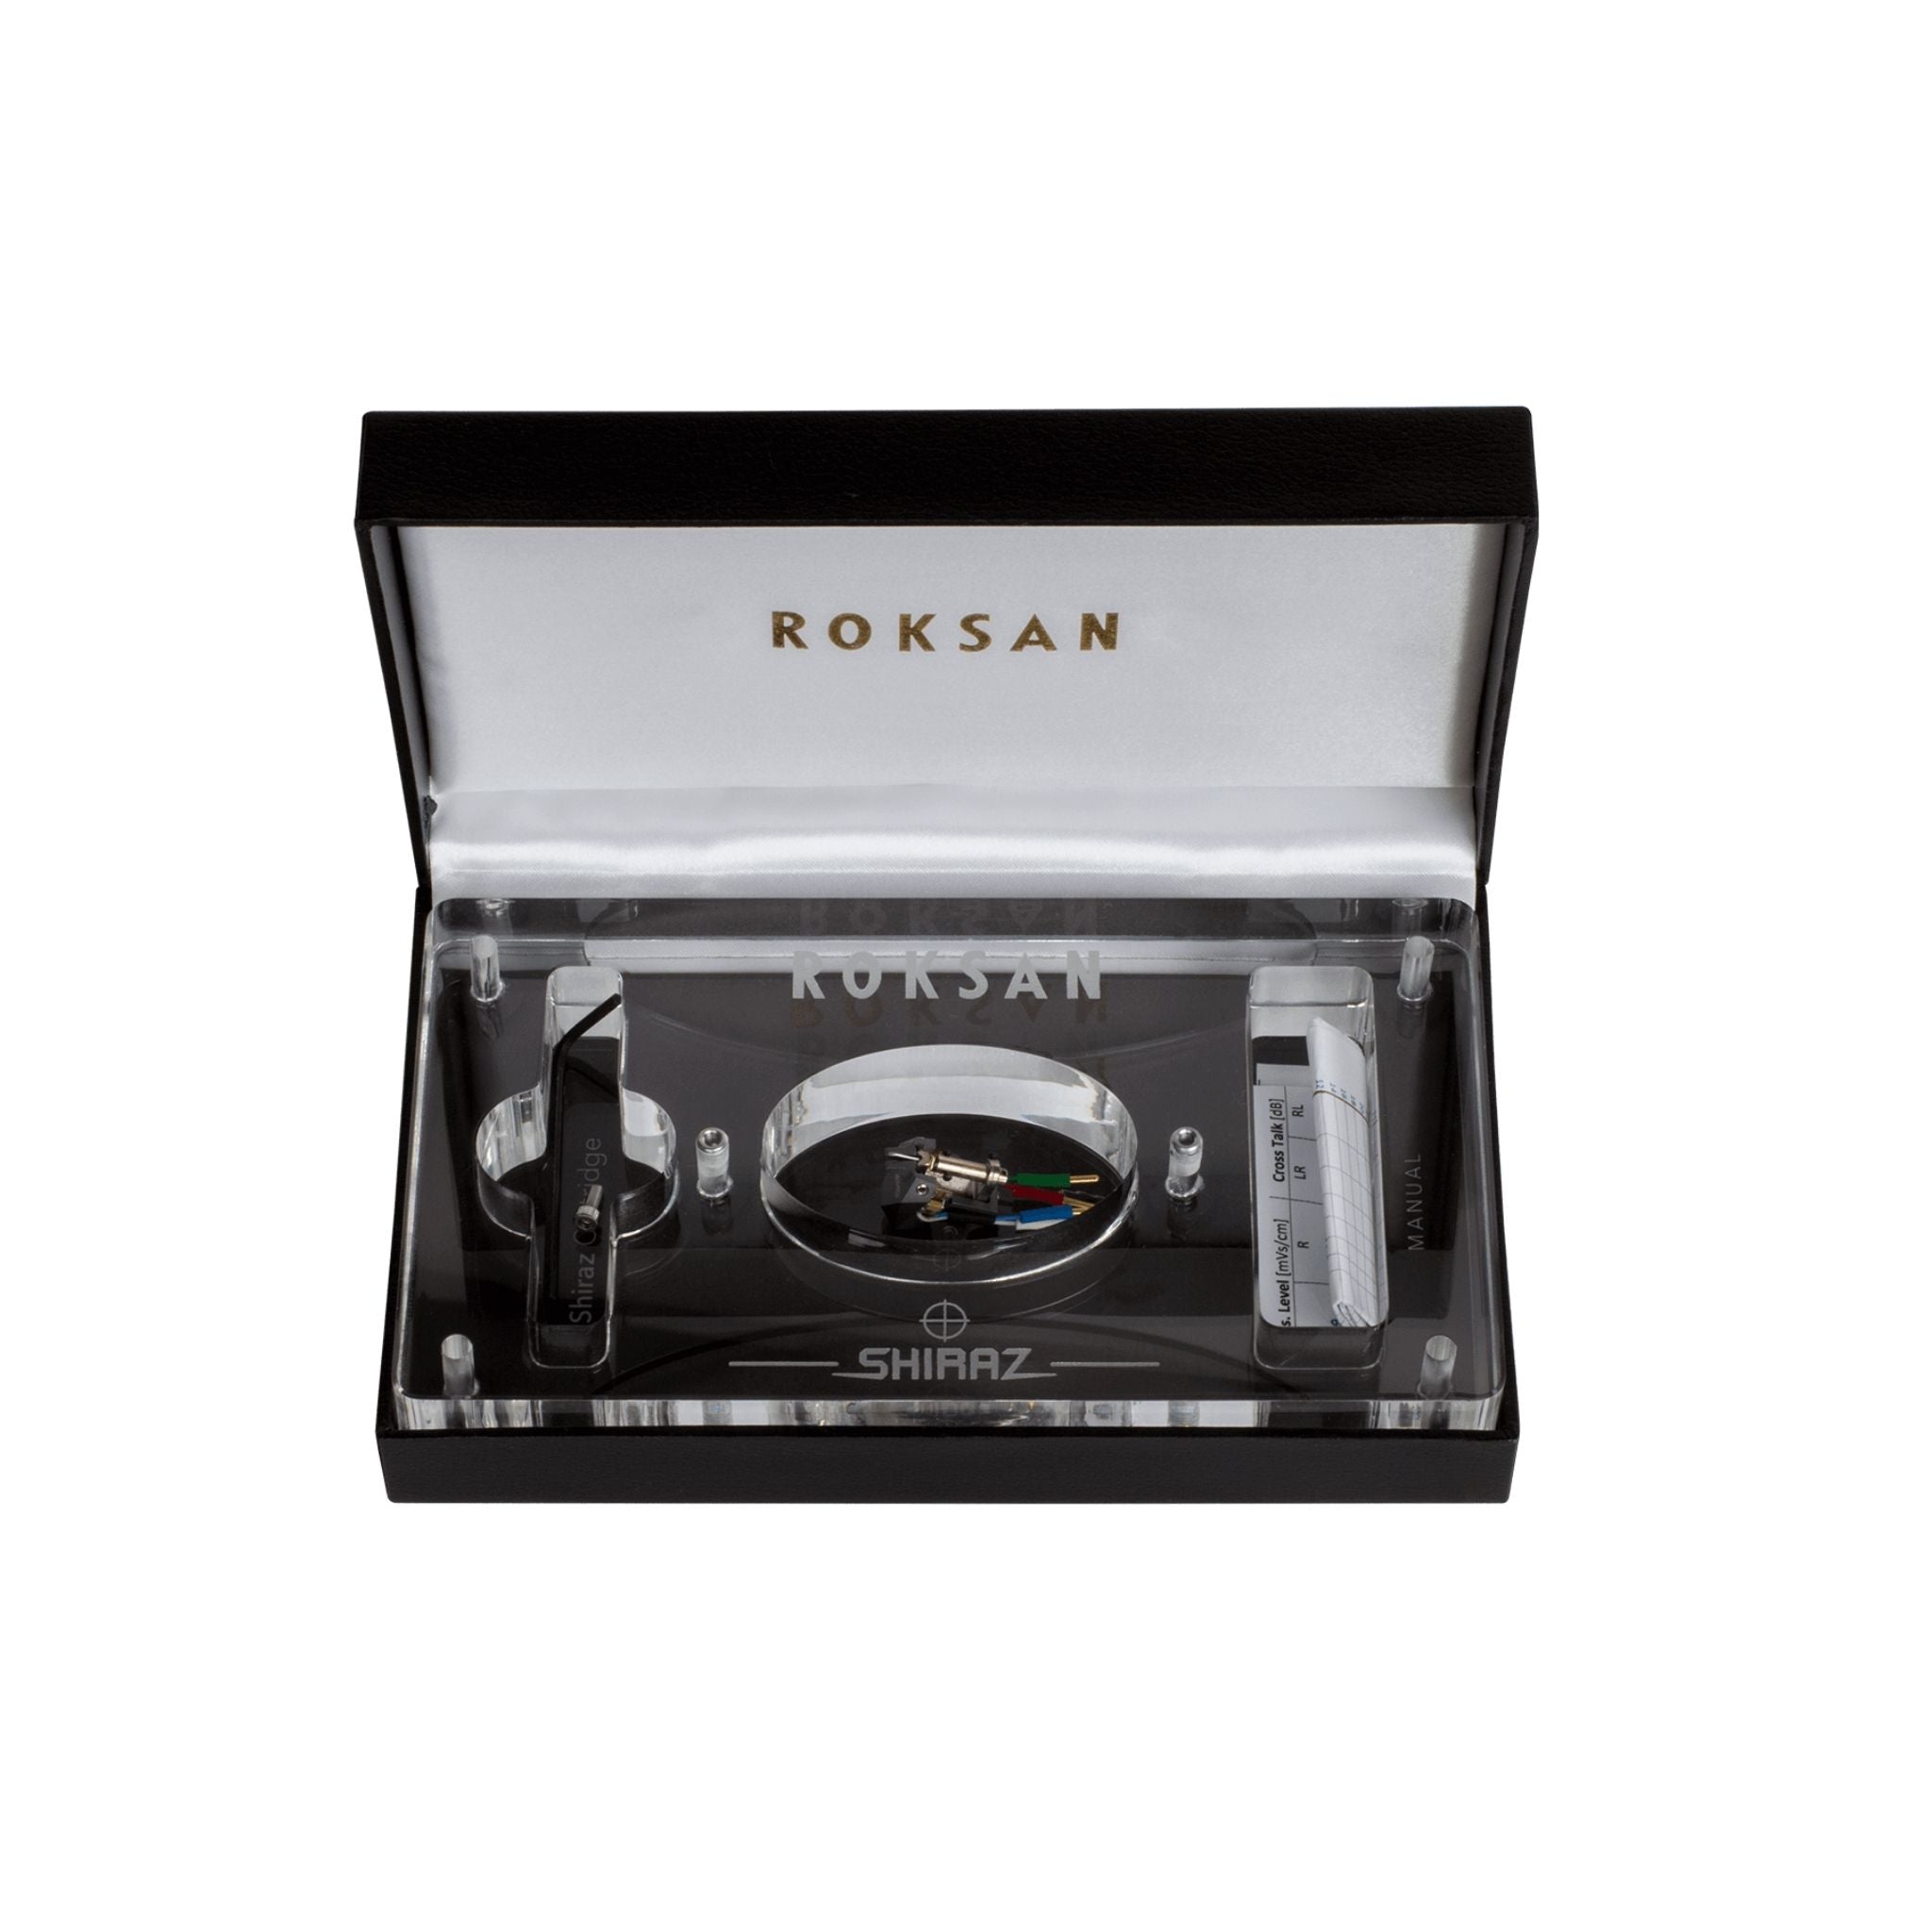 Roksan Shiraz - Turntable Cartridge, Roksan, Turntable Cartridges - AVStore.in